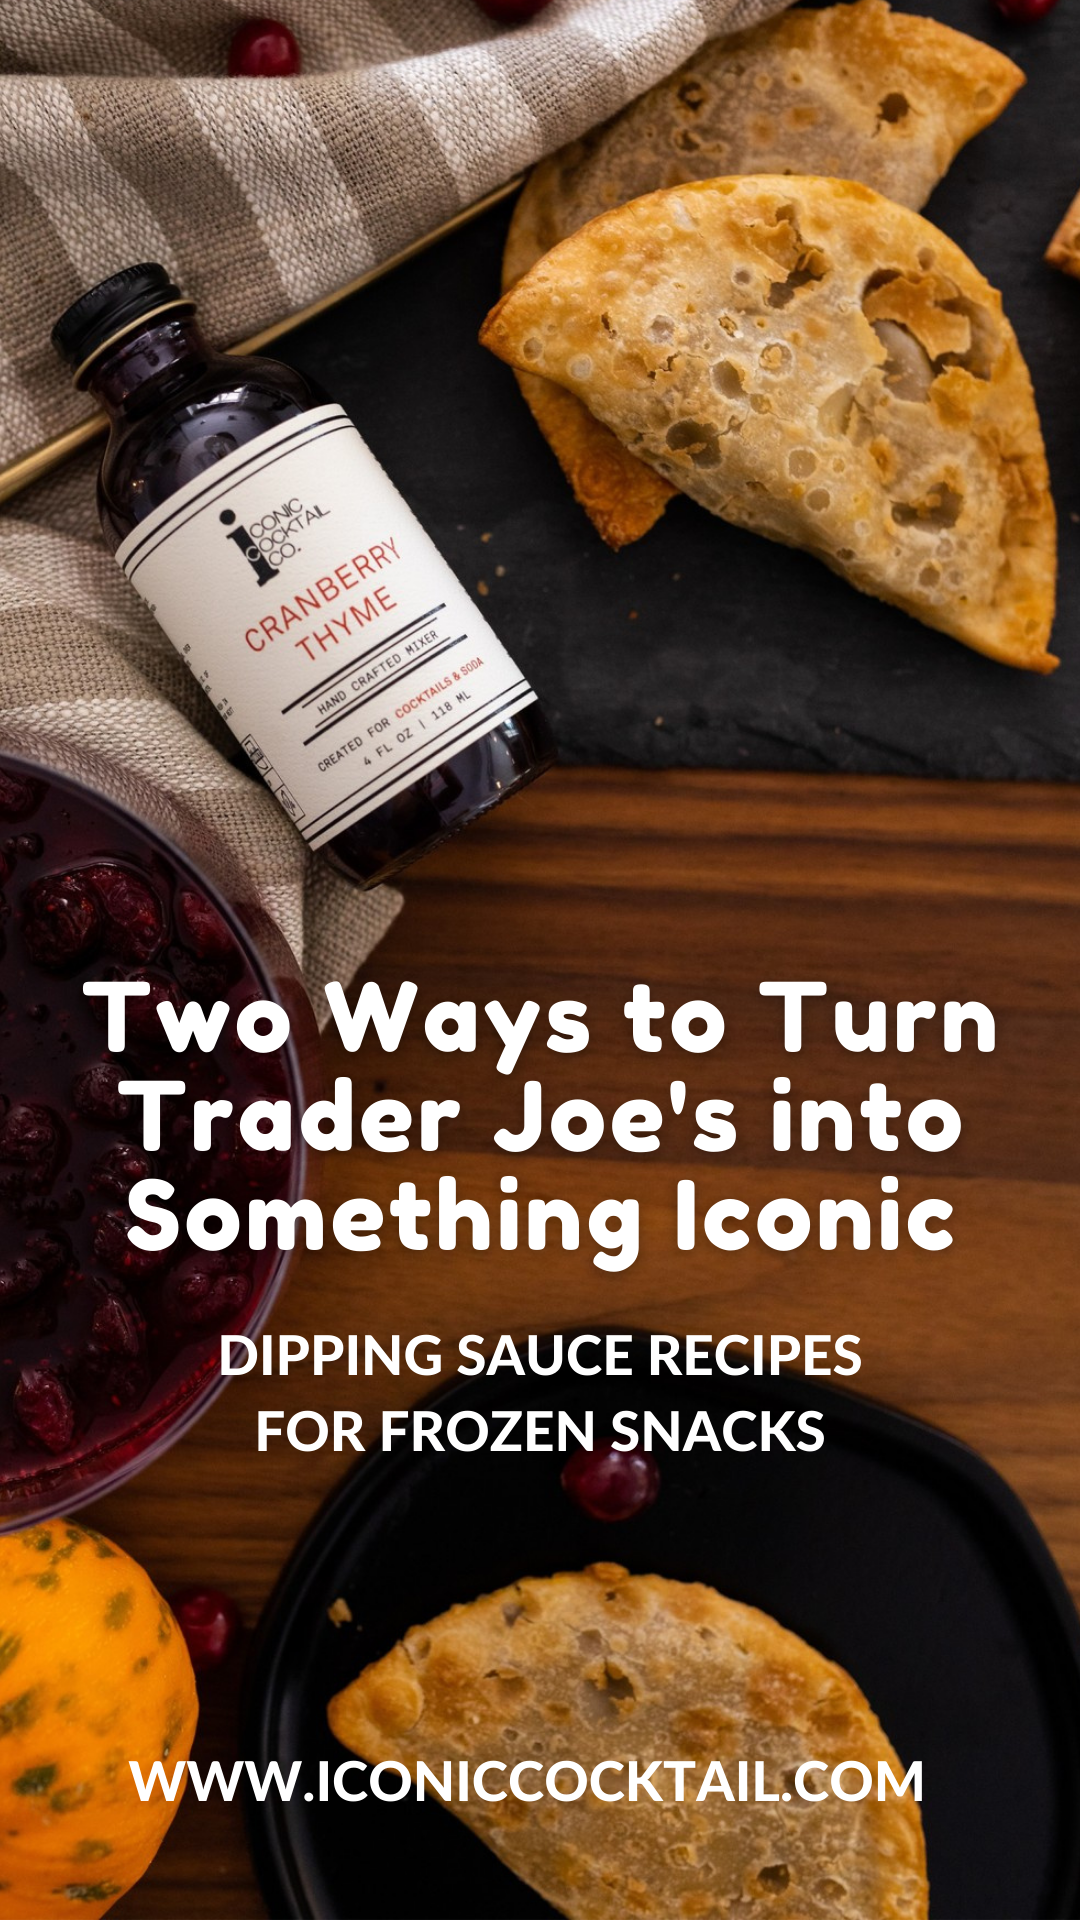 Two Ways to Turn Trader Joe's into Something Iconic